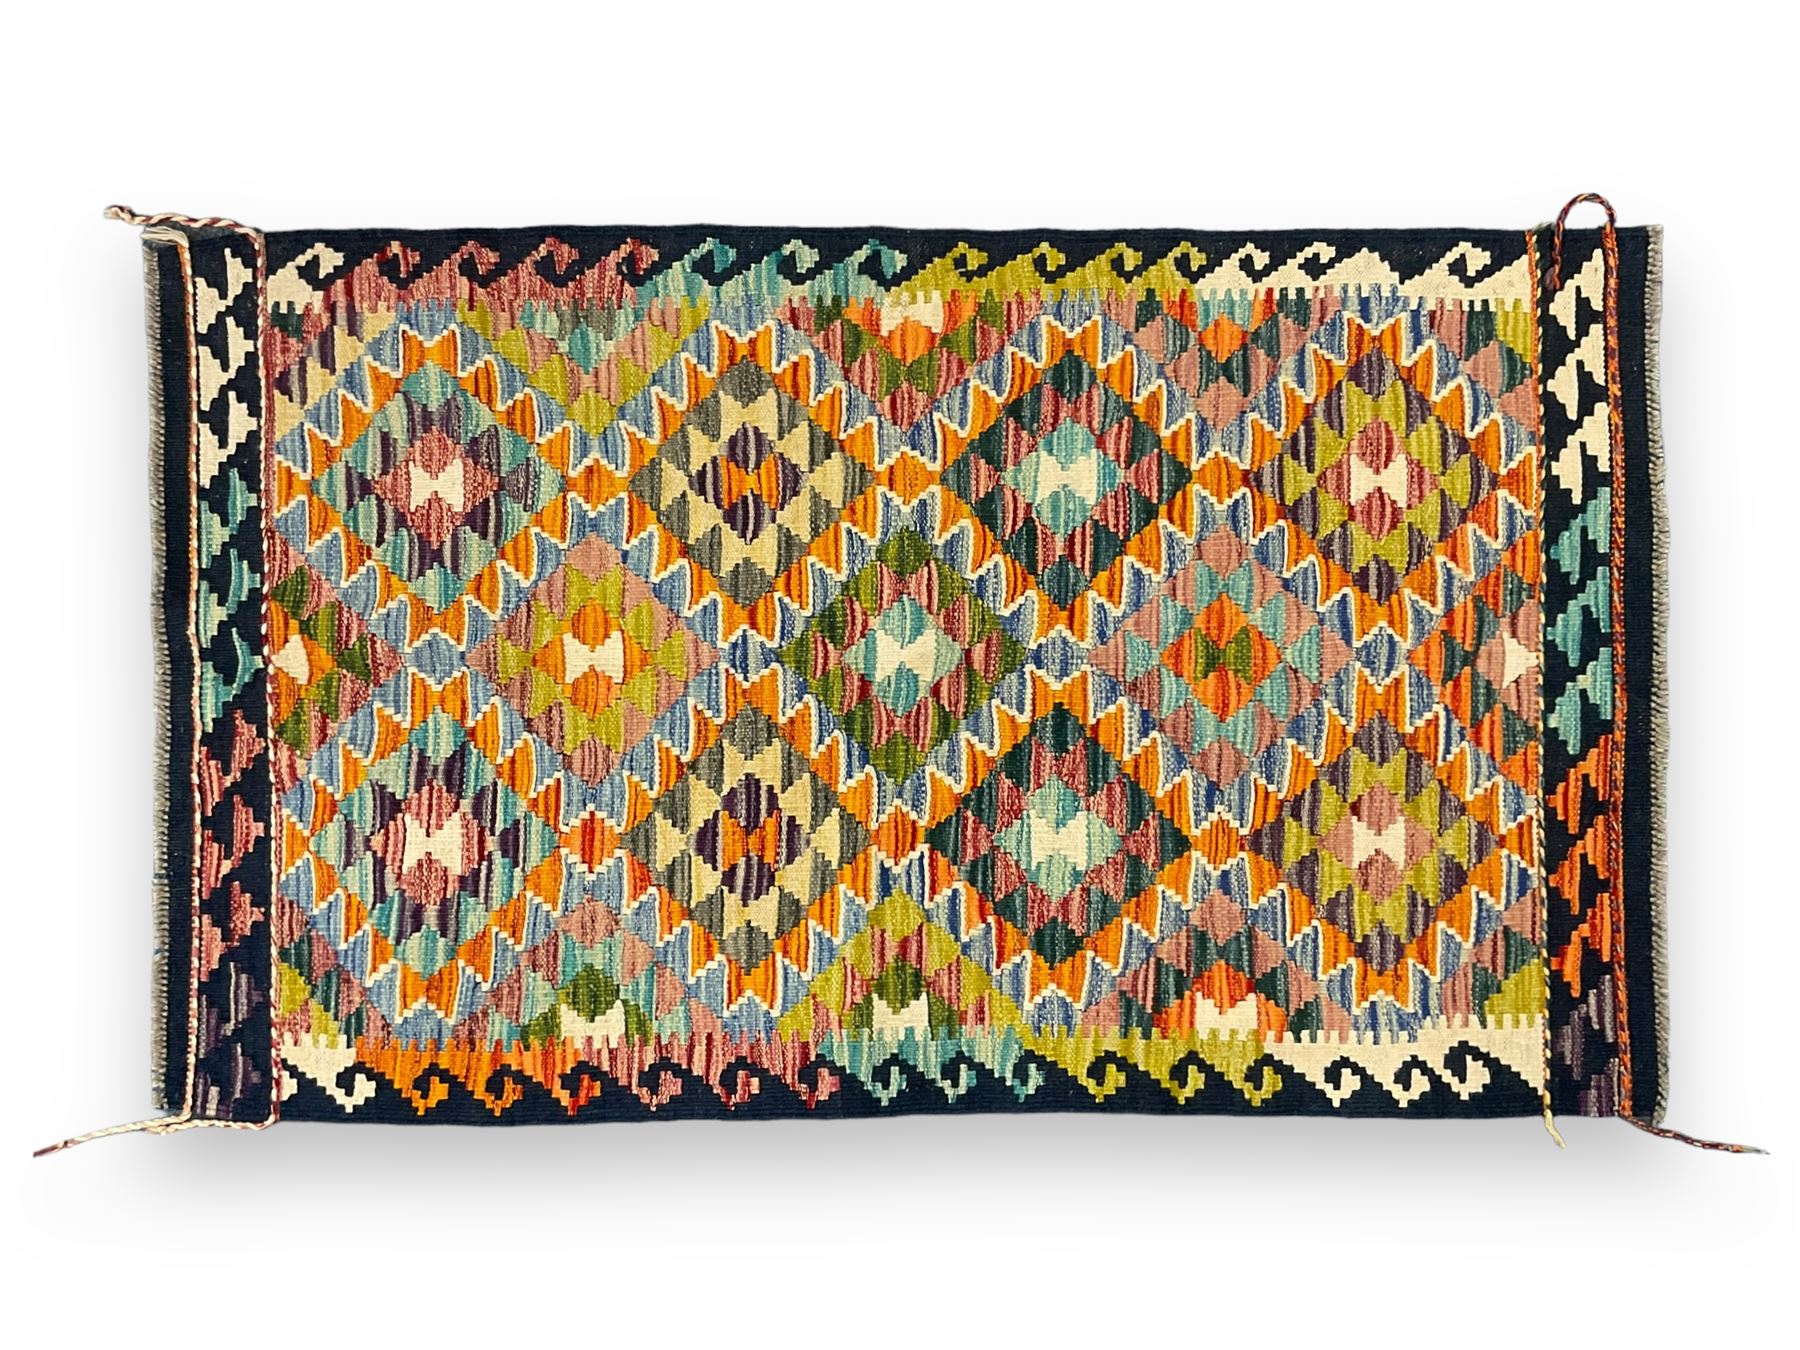 Chobi Kilim multi-coloured rug